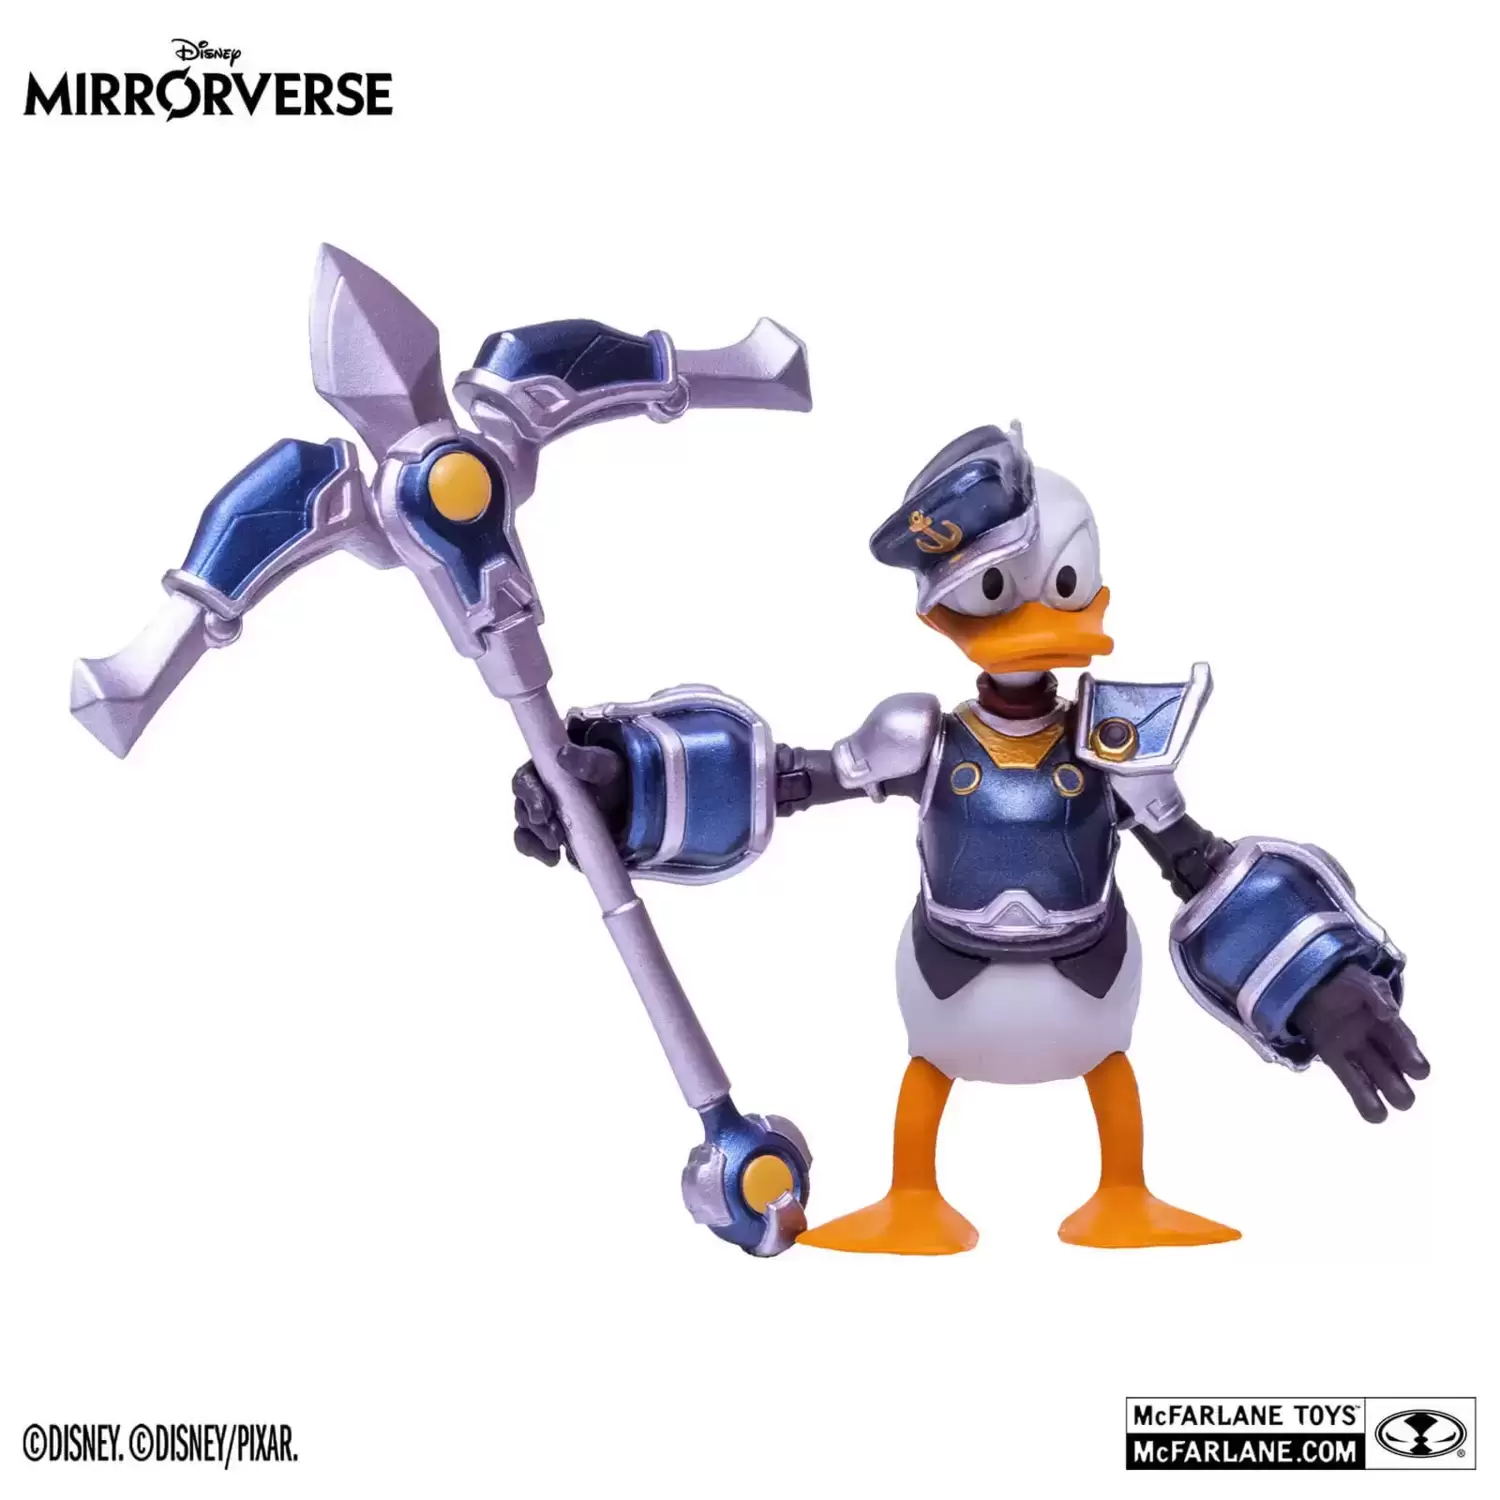 McFarlane - Disney Mirrorverse - Donald Duck